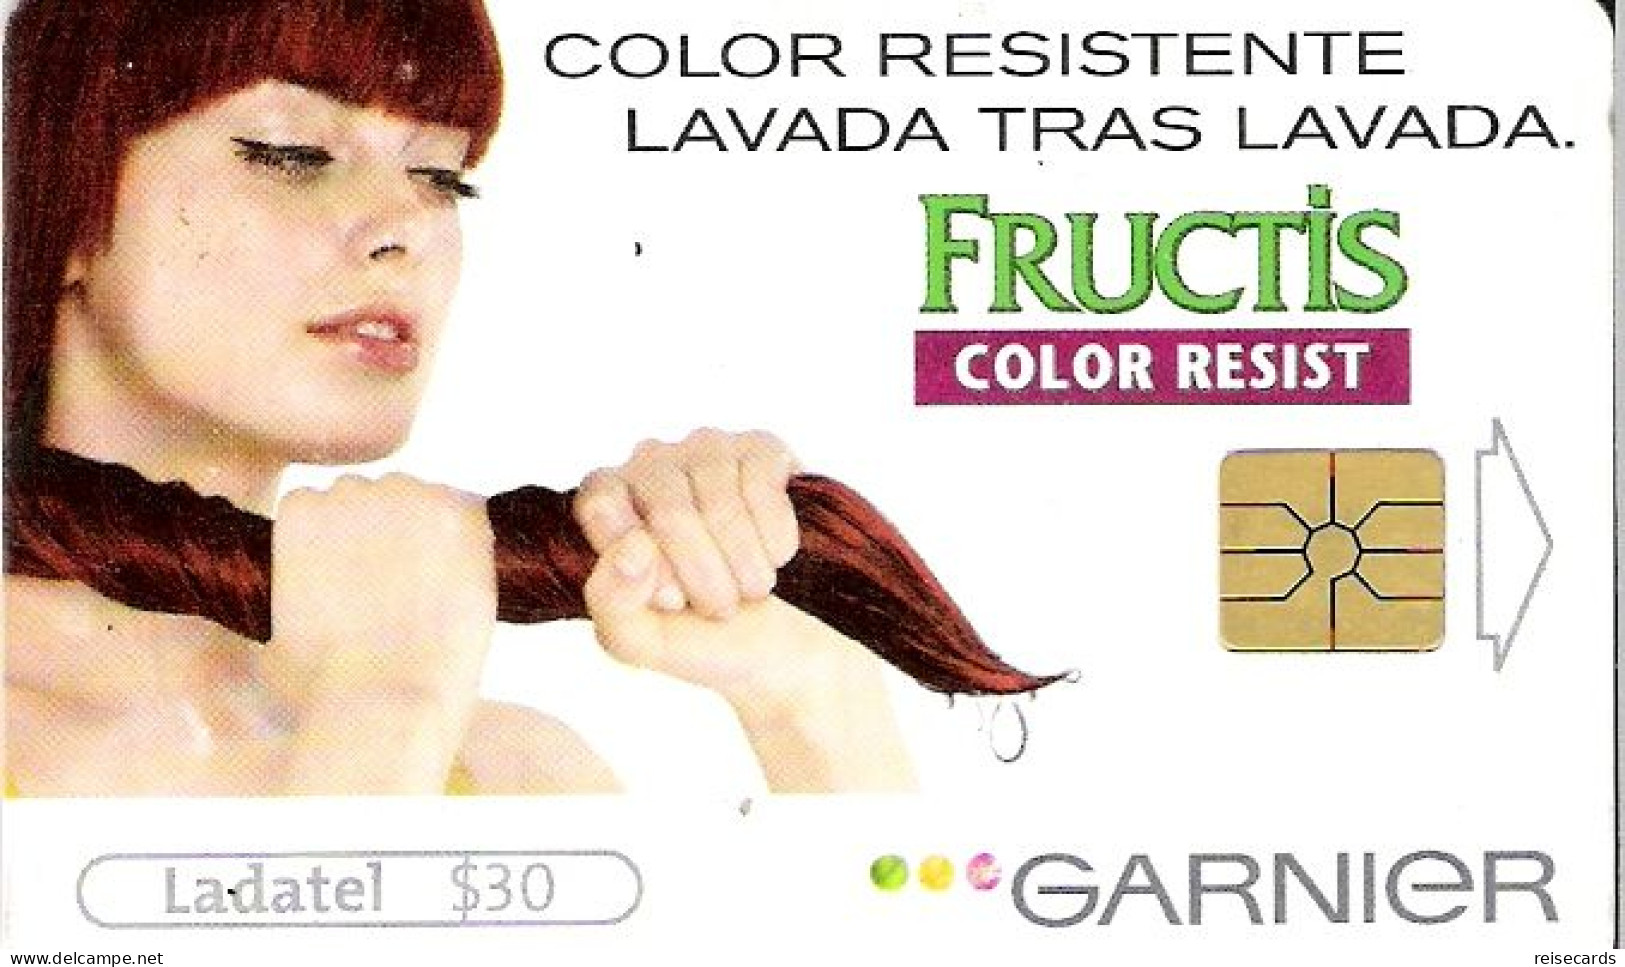 Mexico: Telmex/lLadatel - 2003 Garnier, Fructis - México